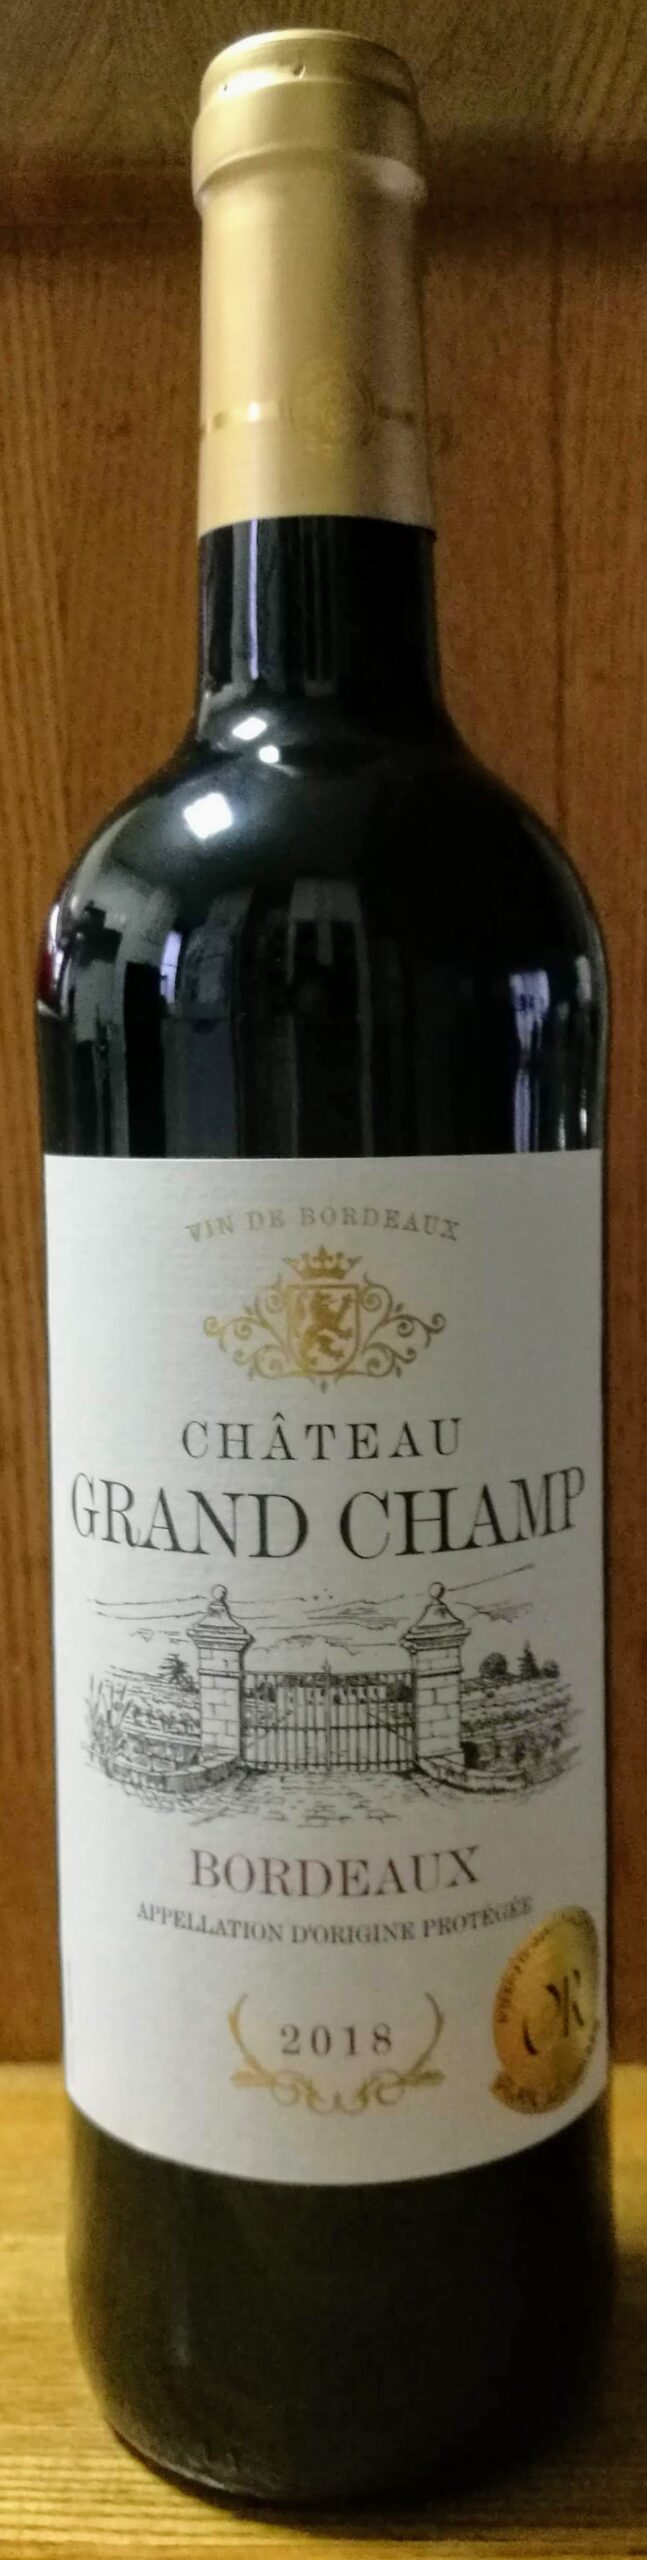 Chateau Grand Champ 2018 シャトー グランシャン : 赤ワイン : フランス